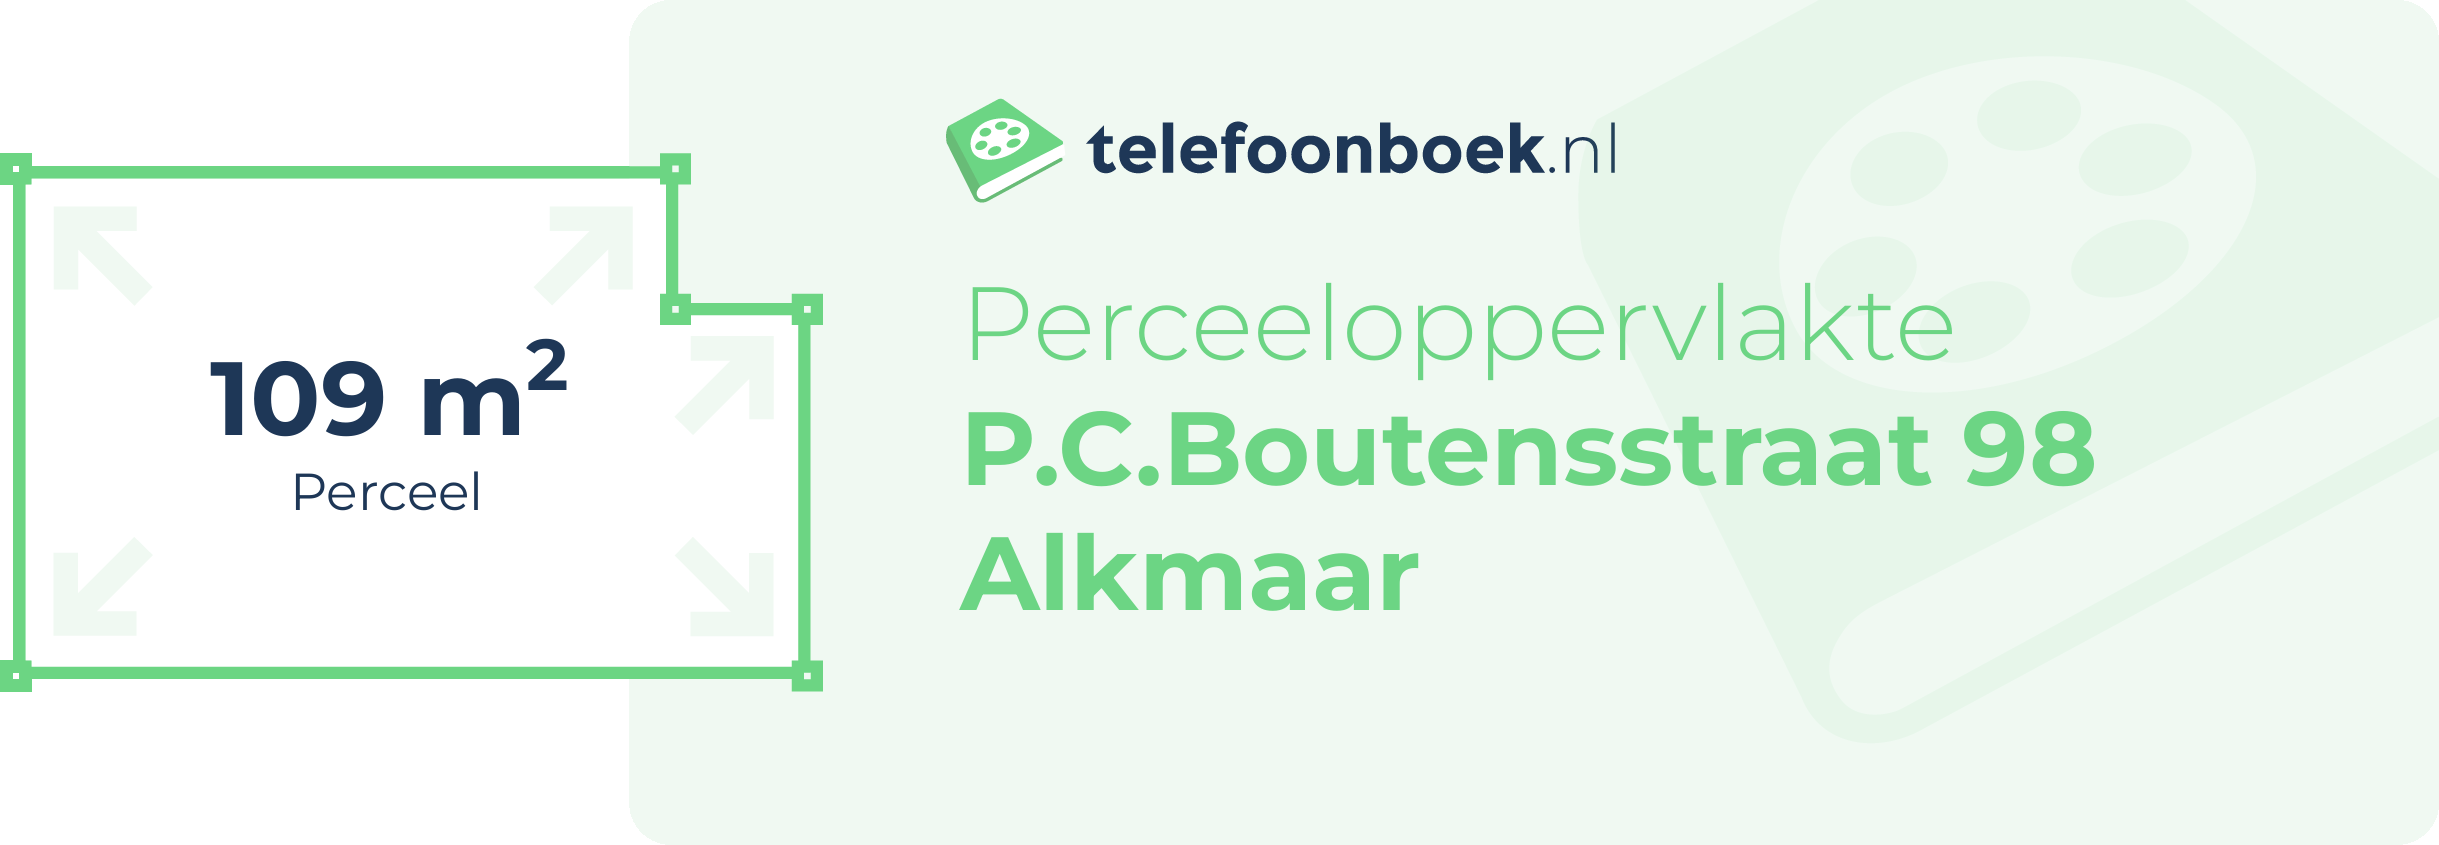 Perceeloppervlakte P.C.Boutensstraat 98 Alkmaar